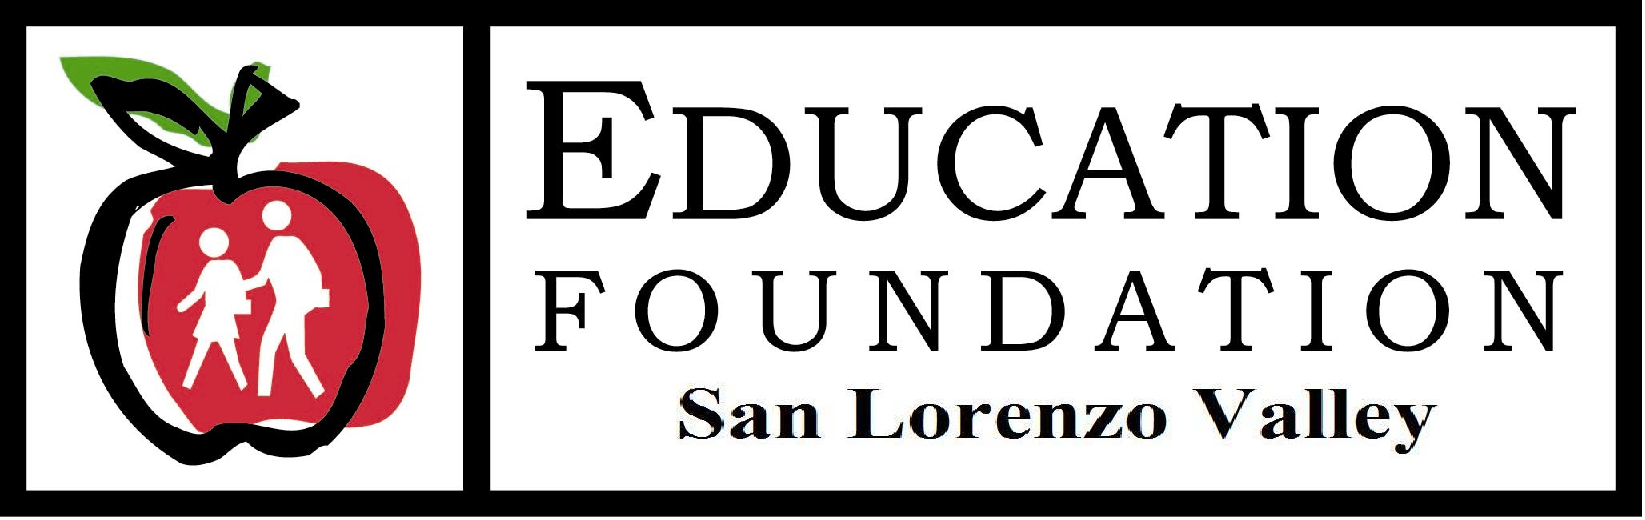 education foundation San Lorenzo Valley